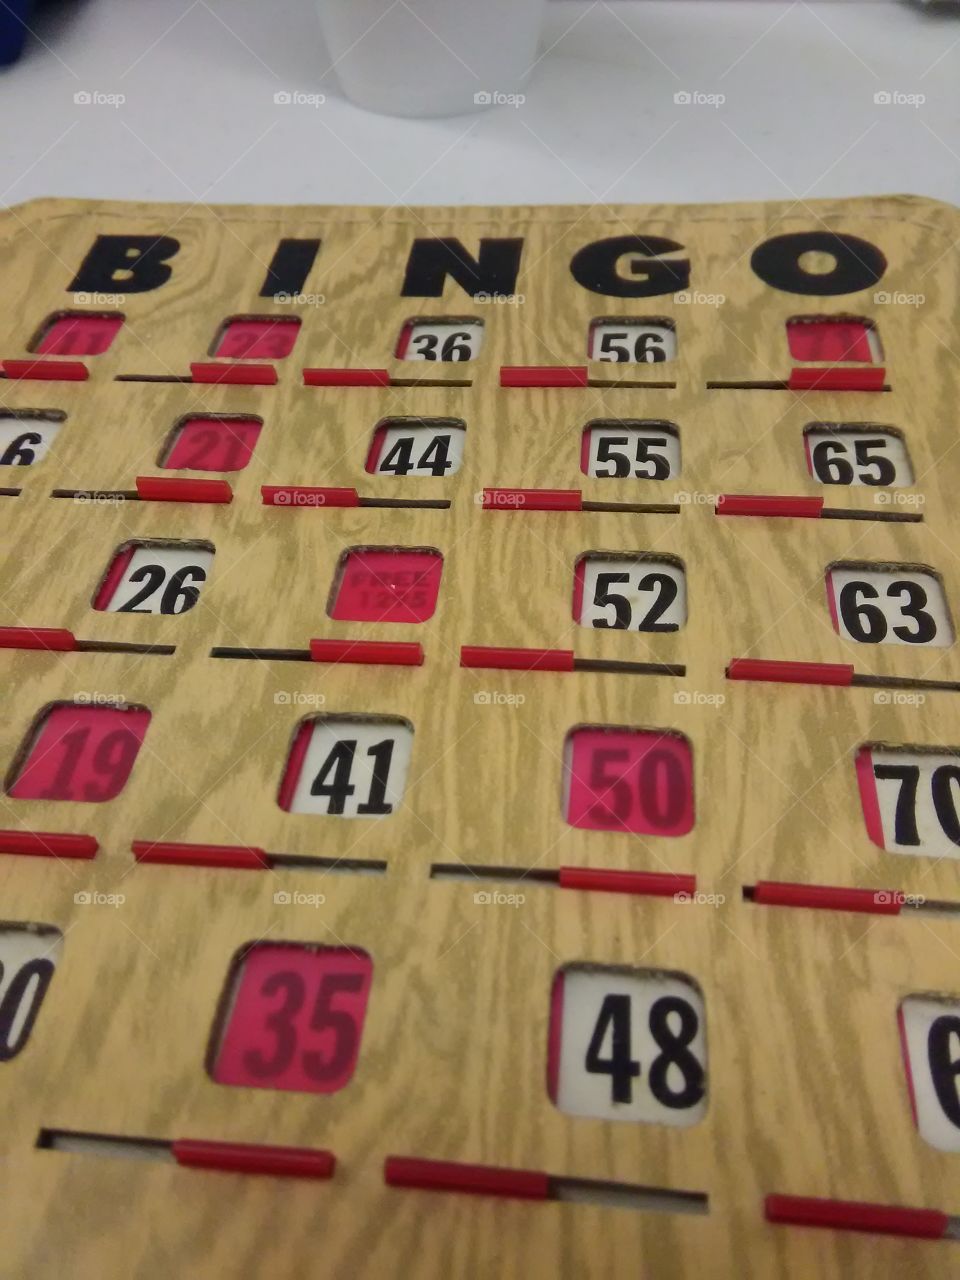 church bingo